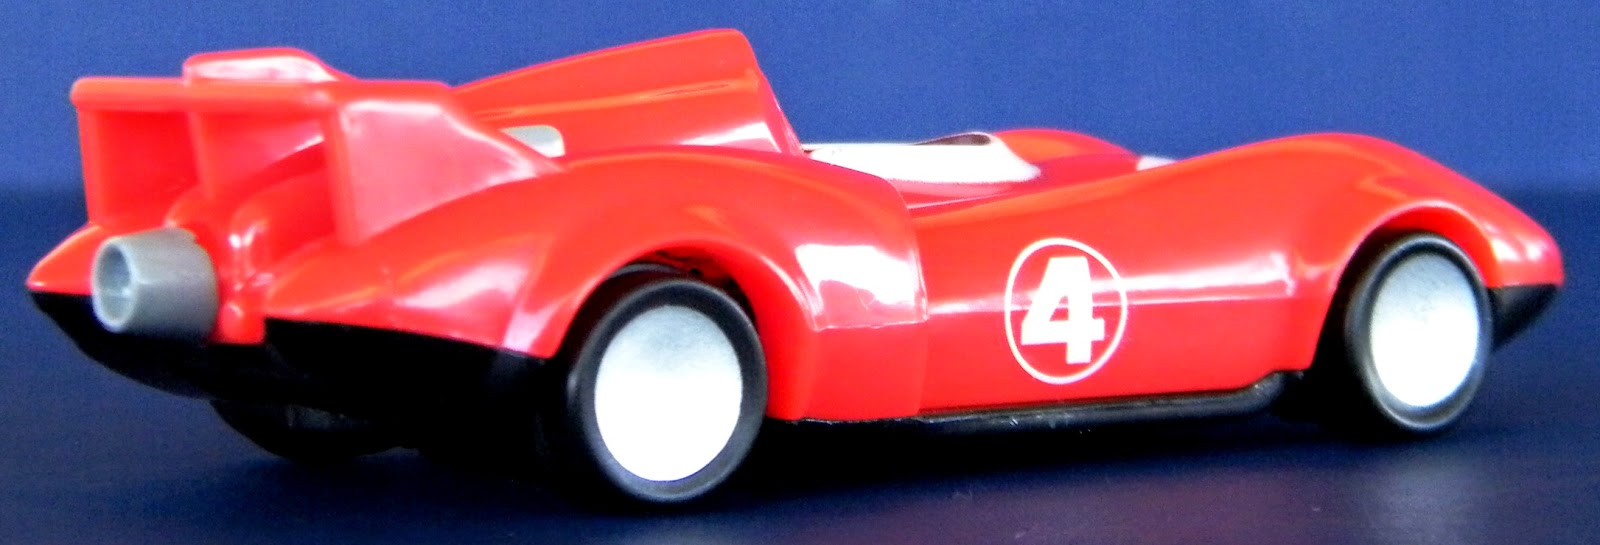 Speed Racer - Wikipedia